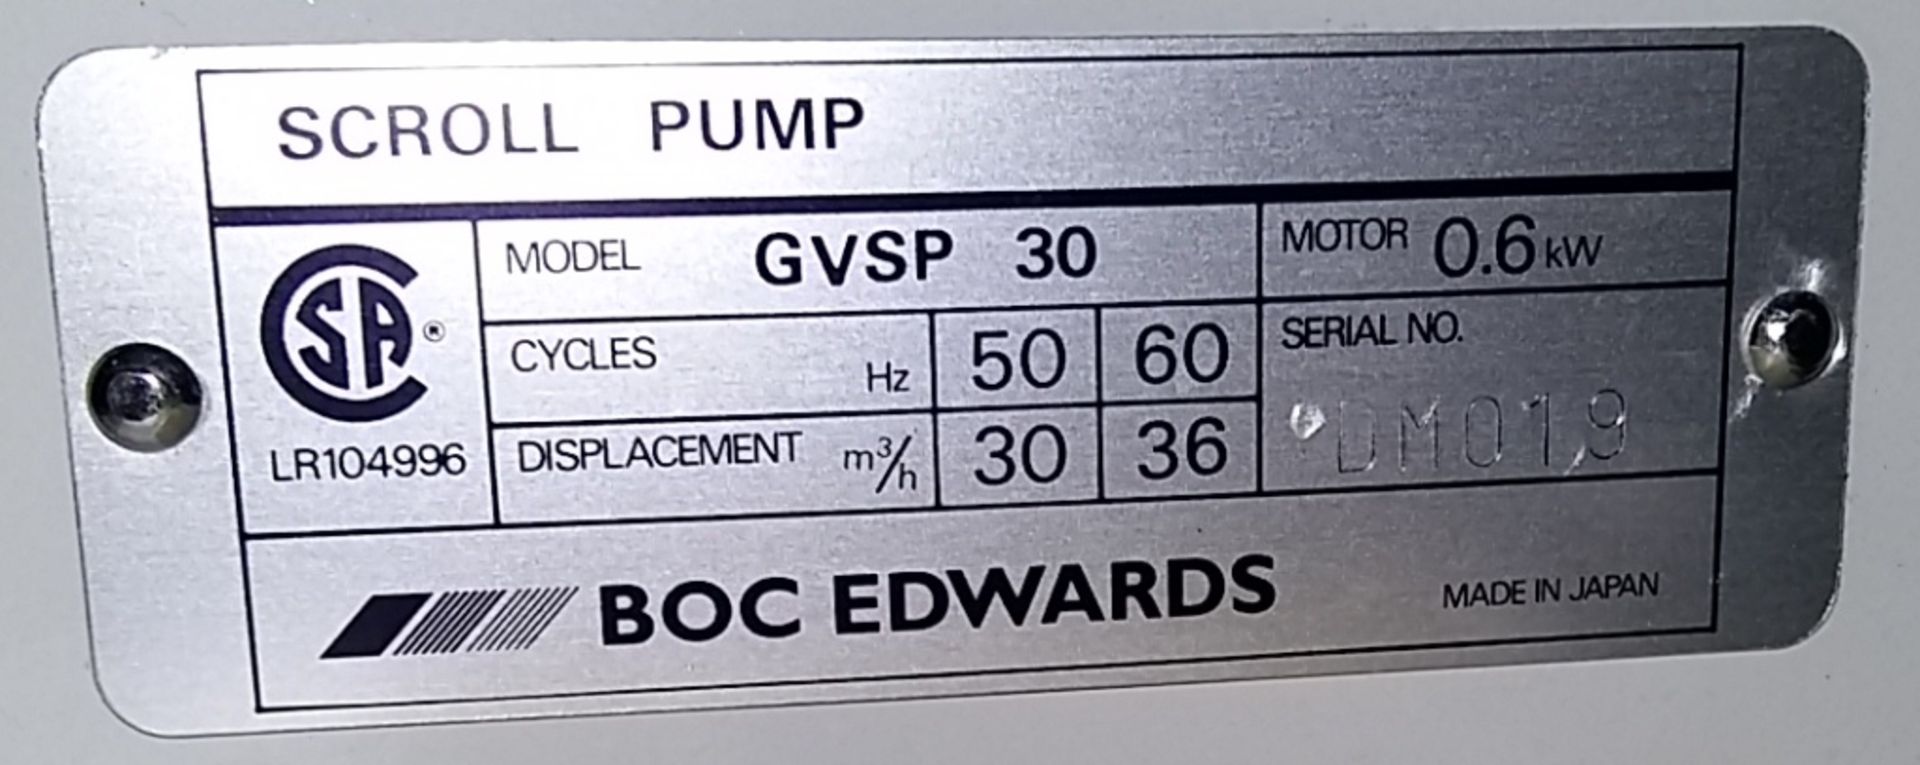 Boc Edwards Scroll Pump GVSP30 - Image 3 of 5